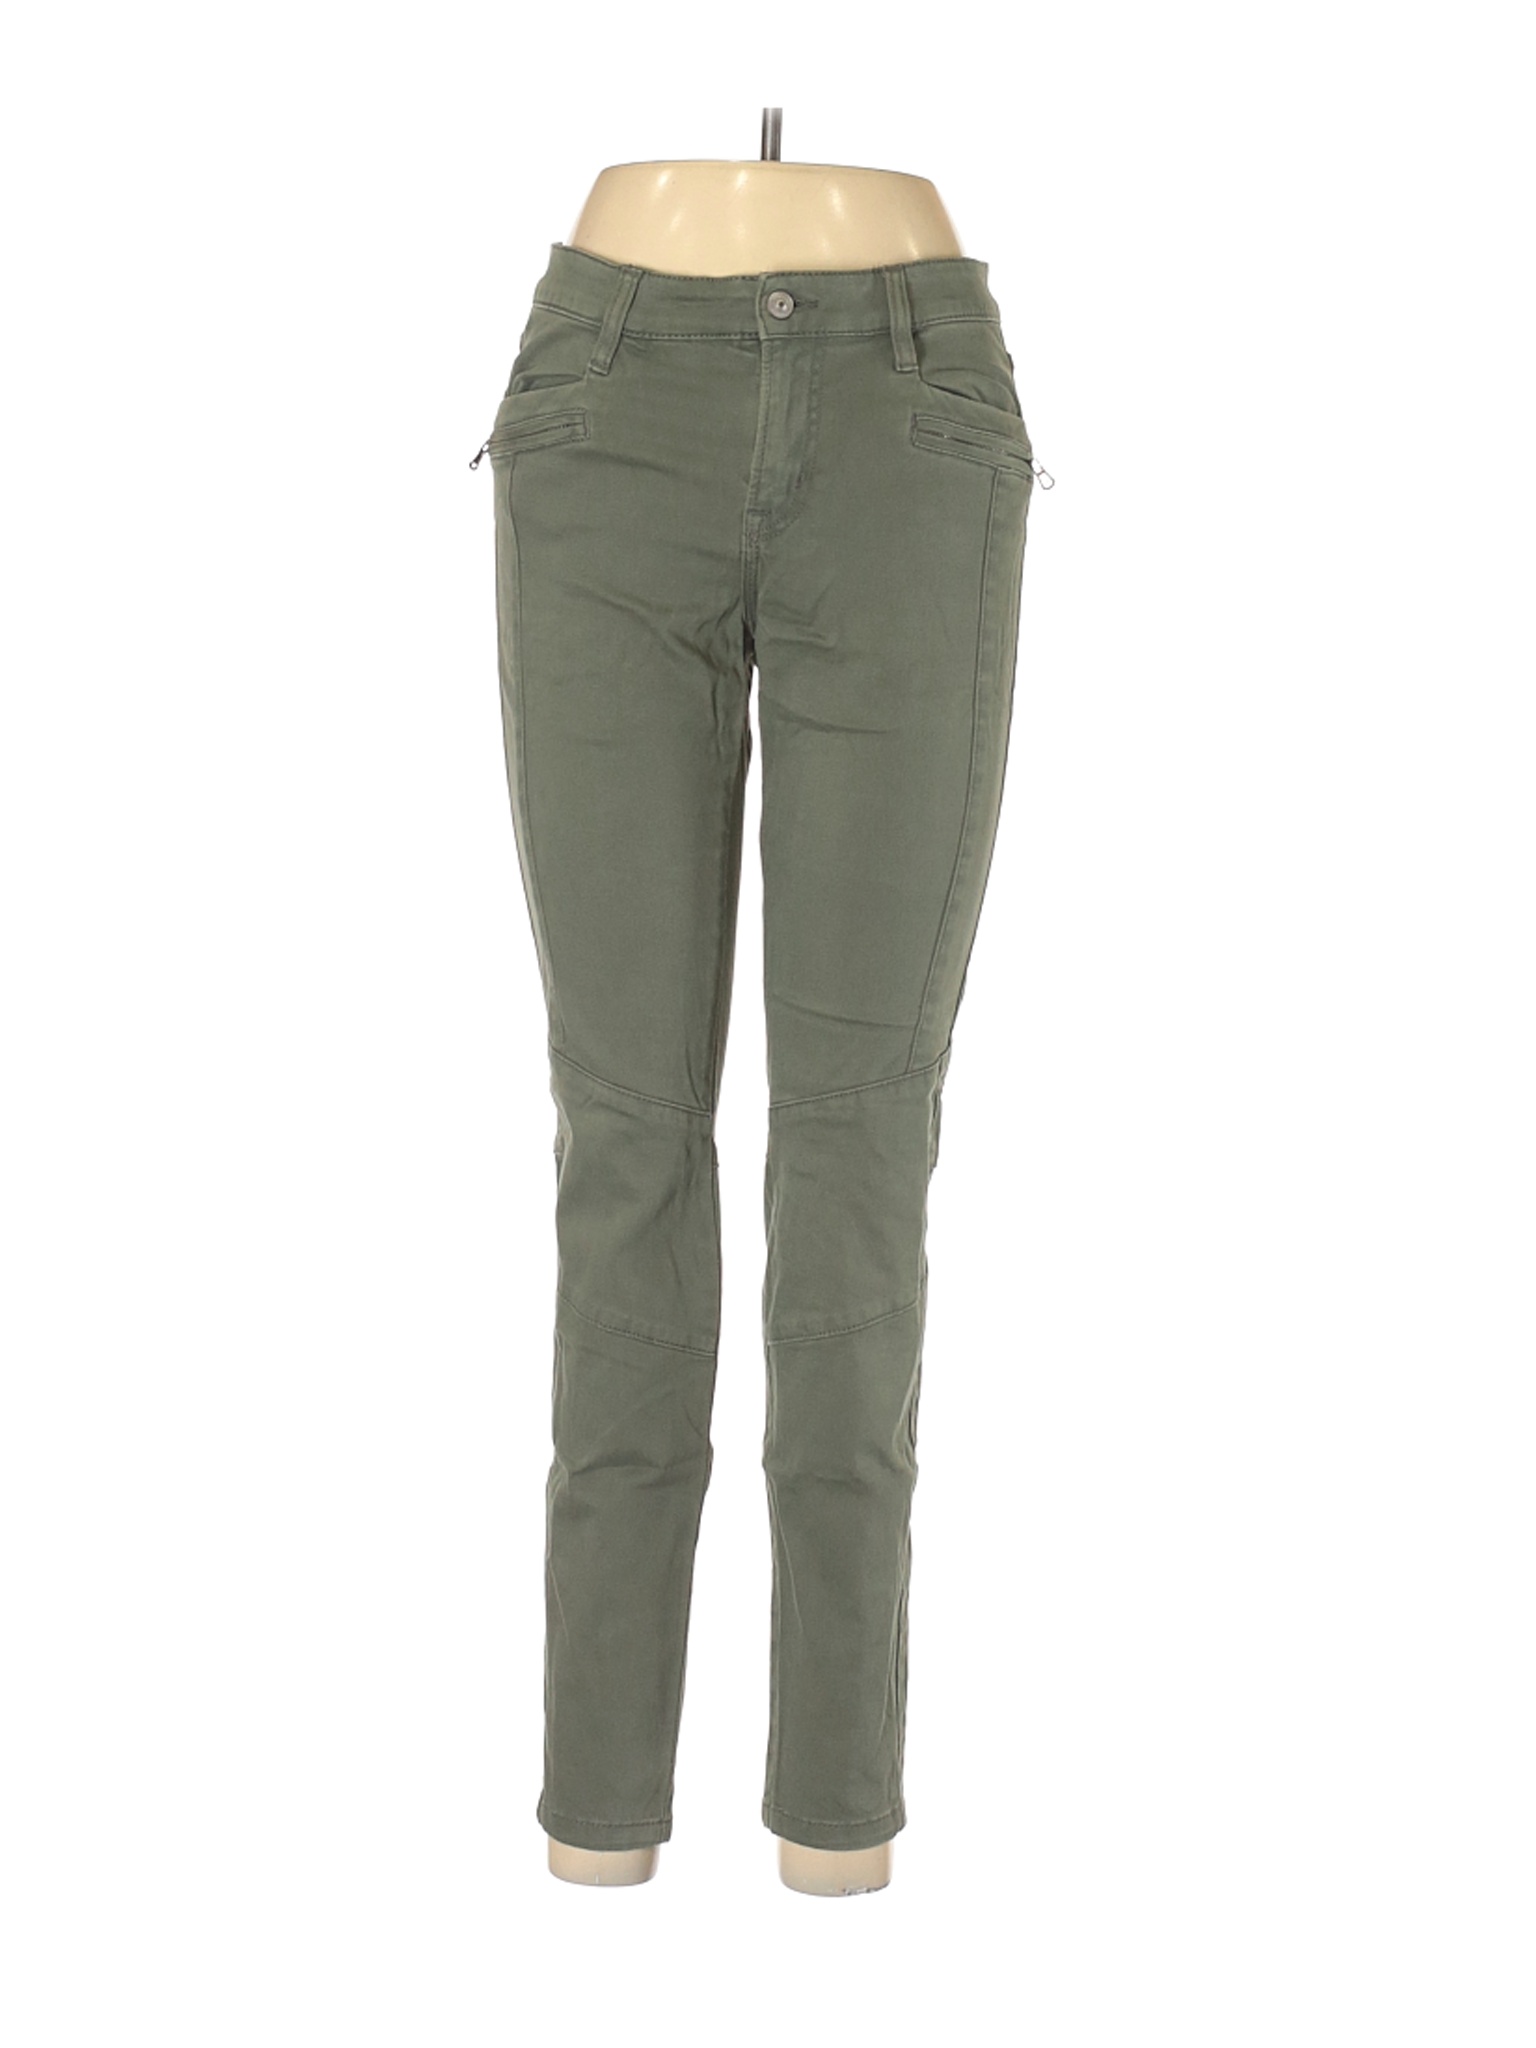 H&M L.O.G.G. Women Green Cargo Pants 8 | eBay